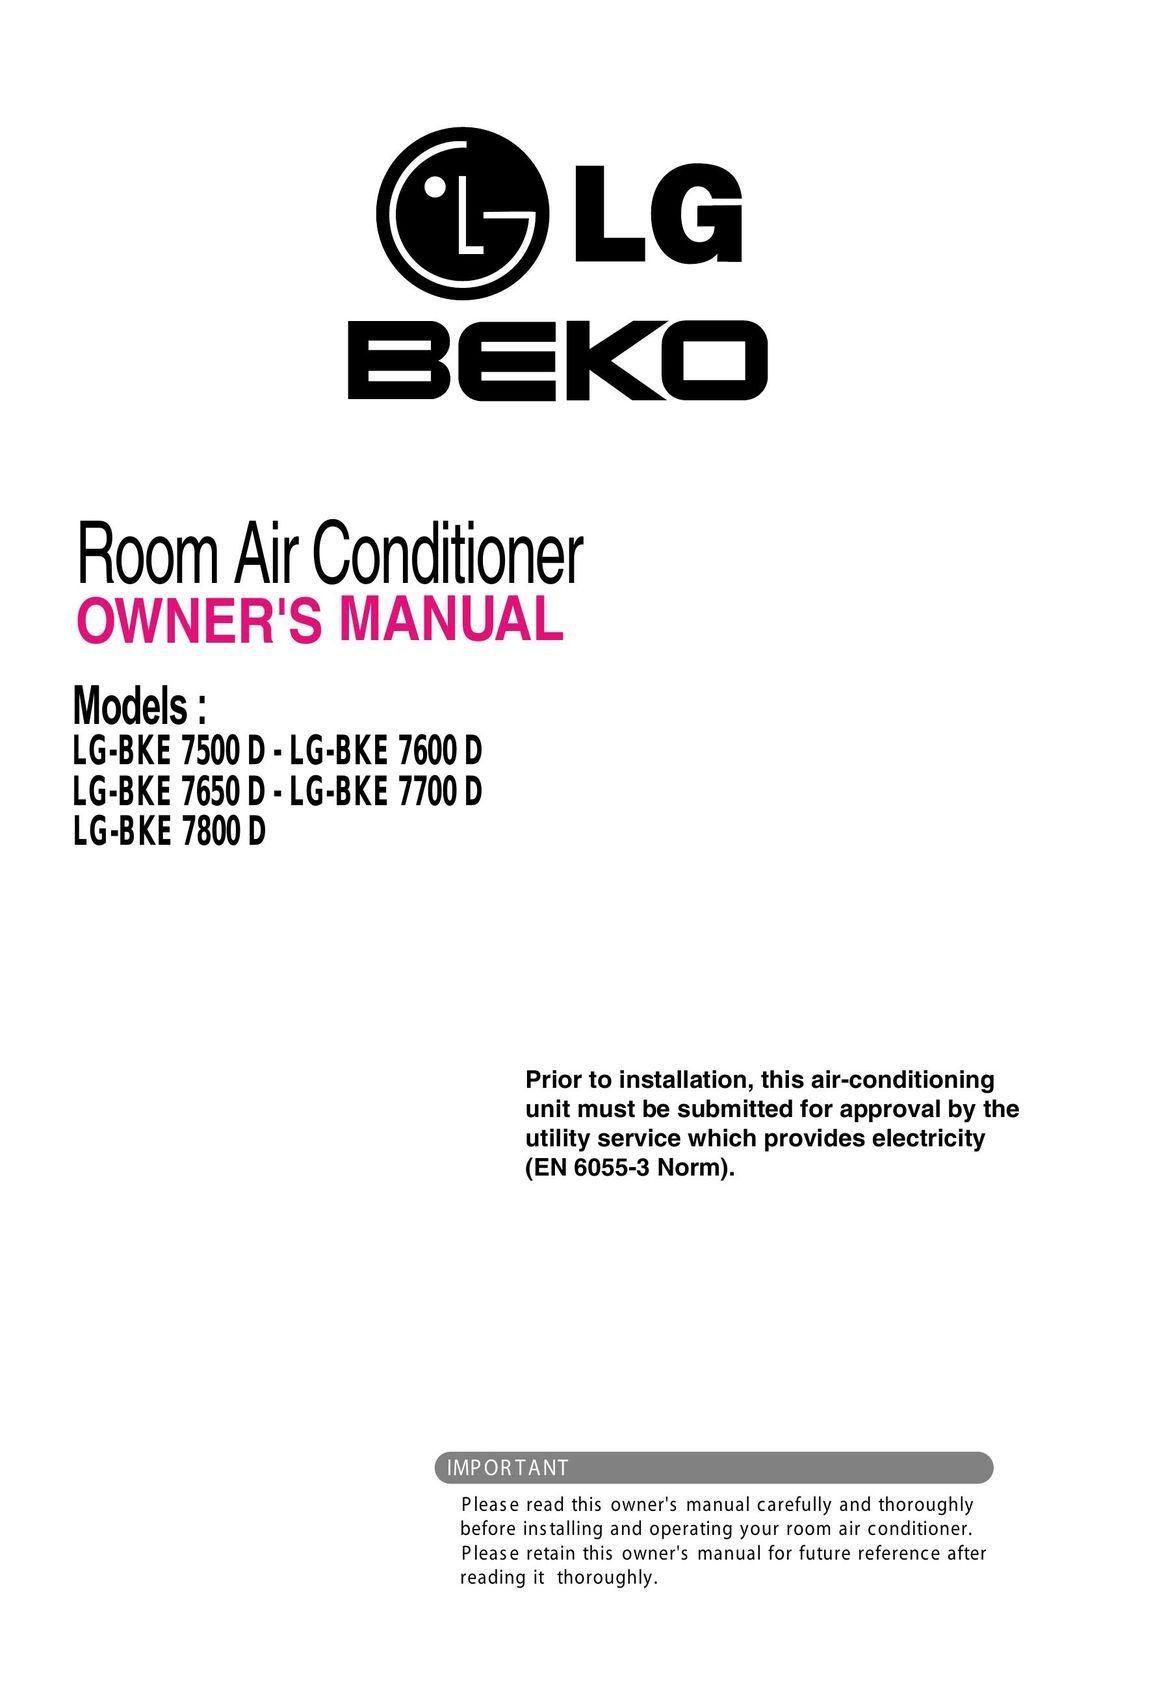 Beko LG-BKE 7500D, LG-BKE 7600D, LG-BKE 7650 D, LG-BKE 7700 D, LG-BKE 7800 D Air Conditioner User Manual